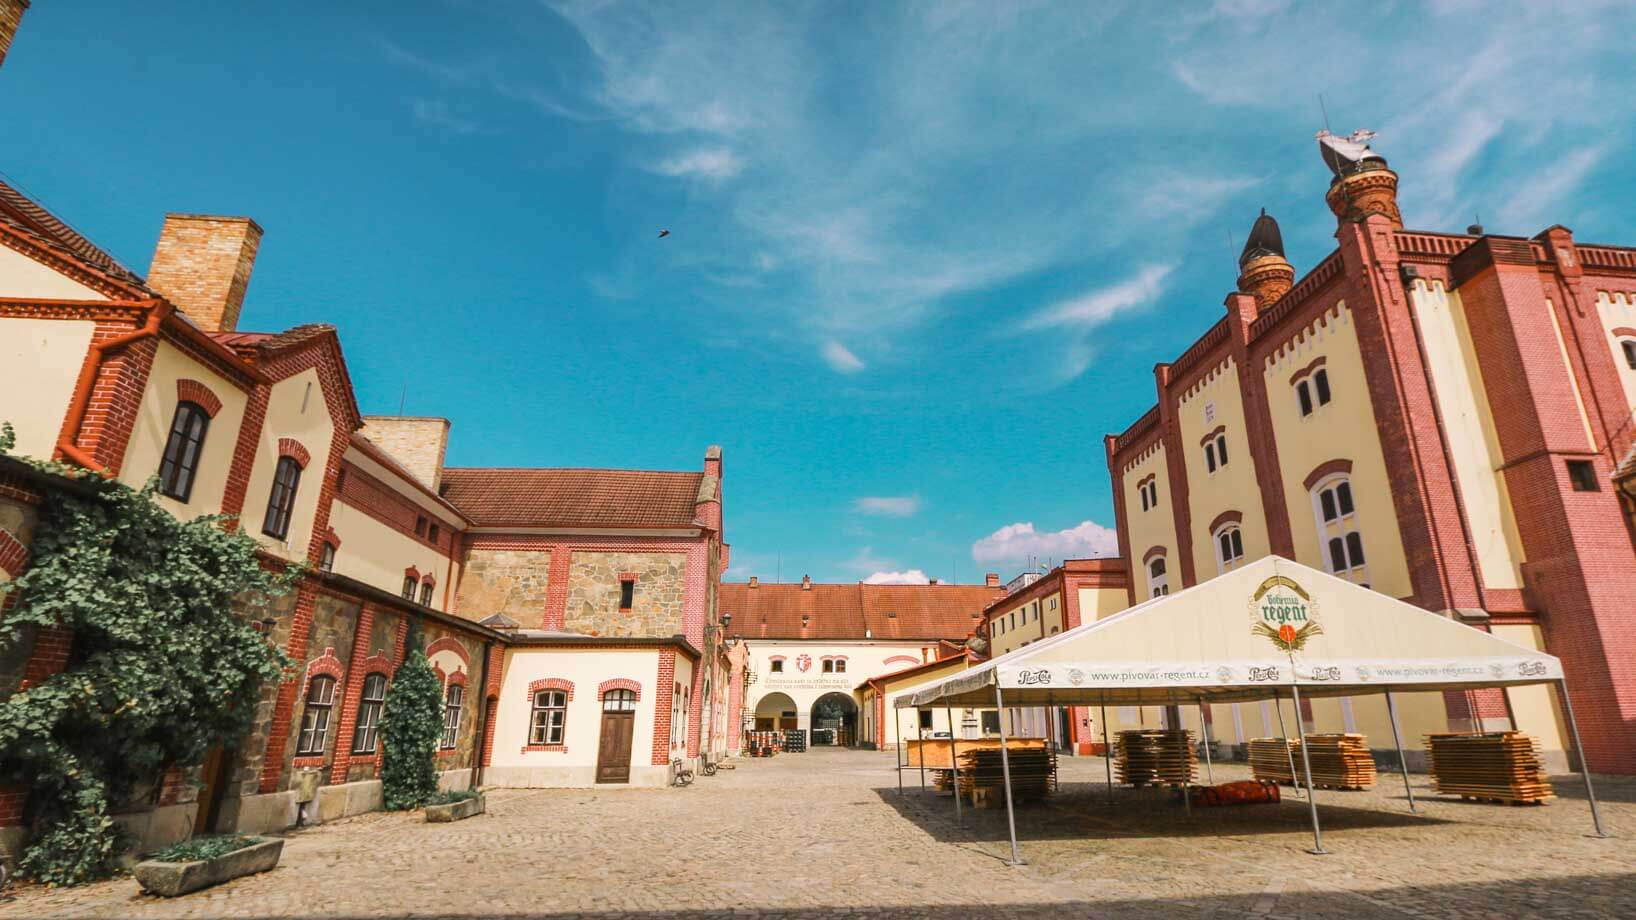 Trebon Bohemia Regent Brewery - How To Spend A Day in Trebon Czech Republic